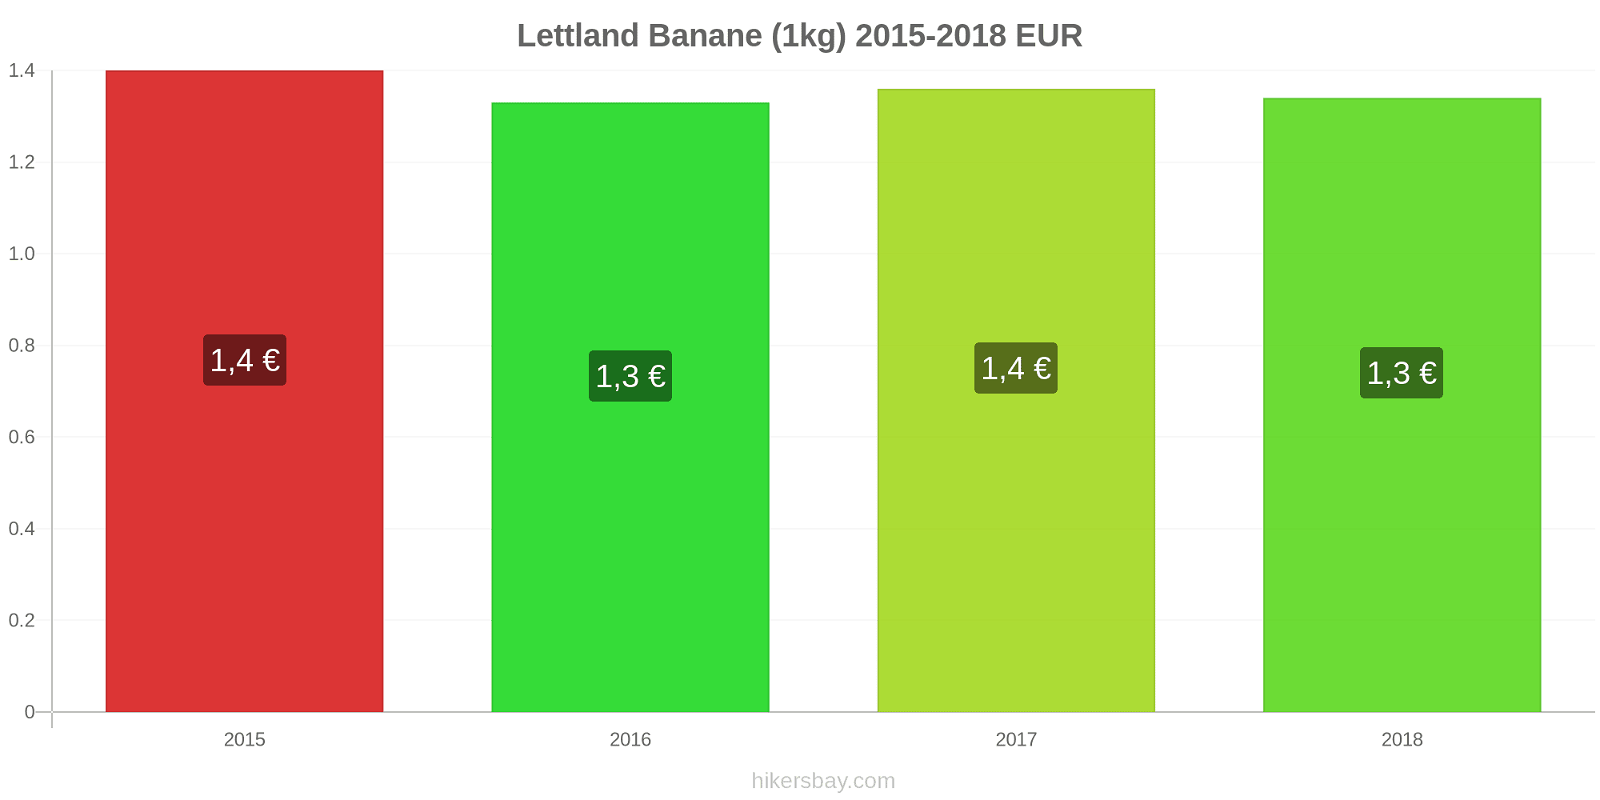 Lettland Preisänderungen Bananen (1kg) hikersbay.com